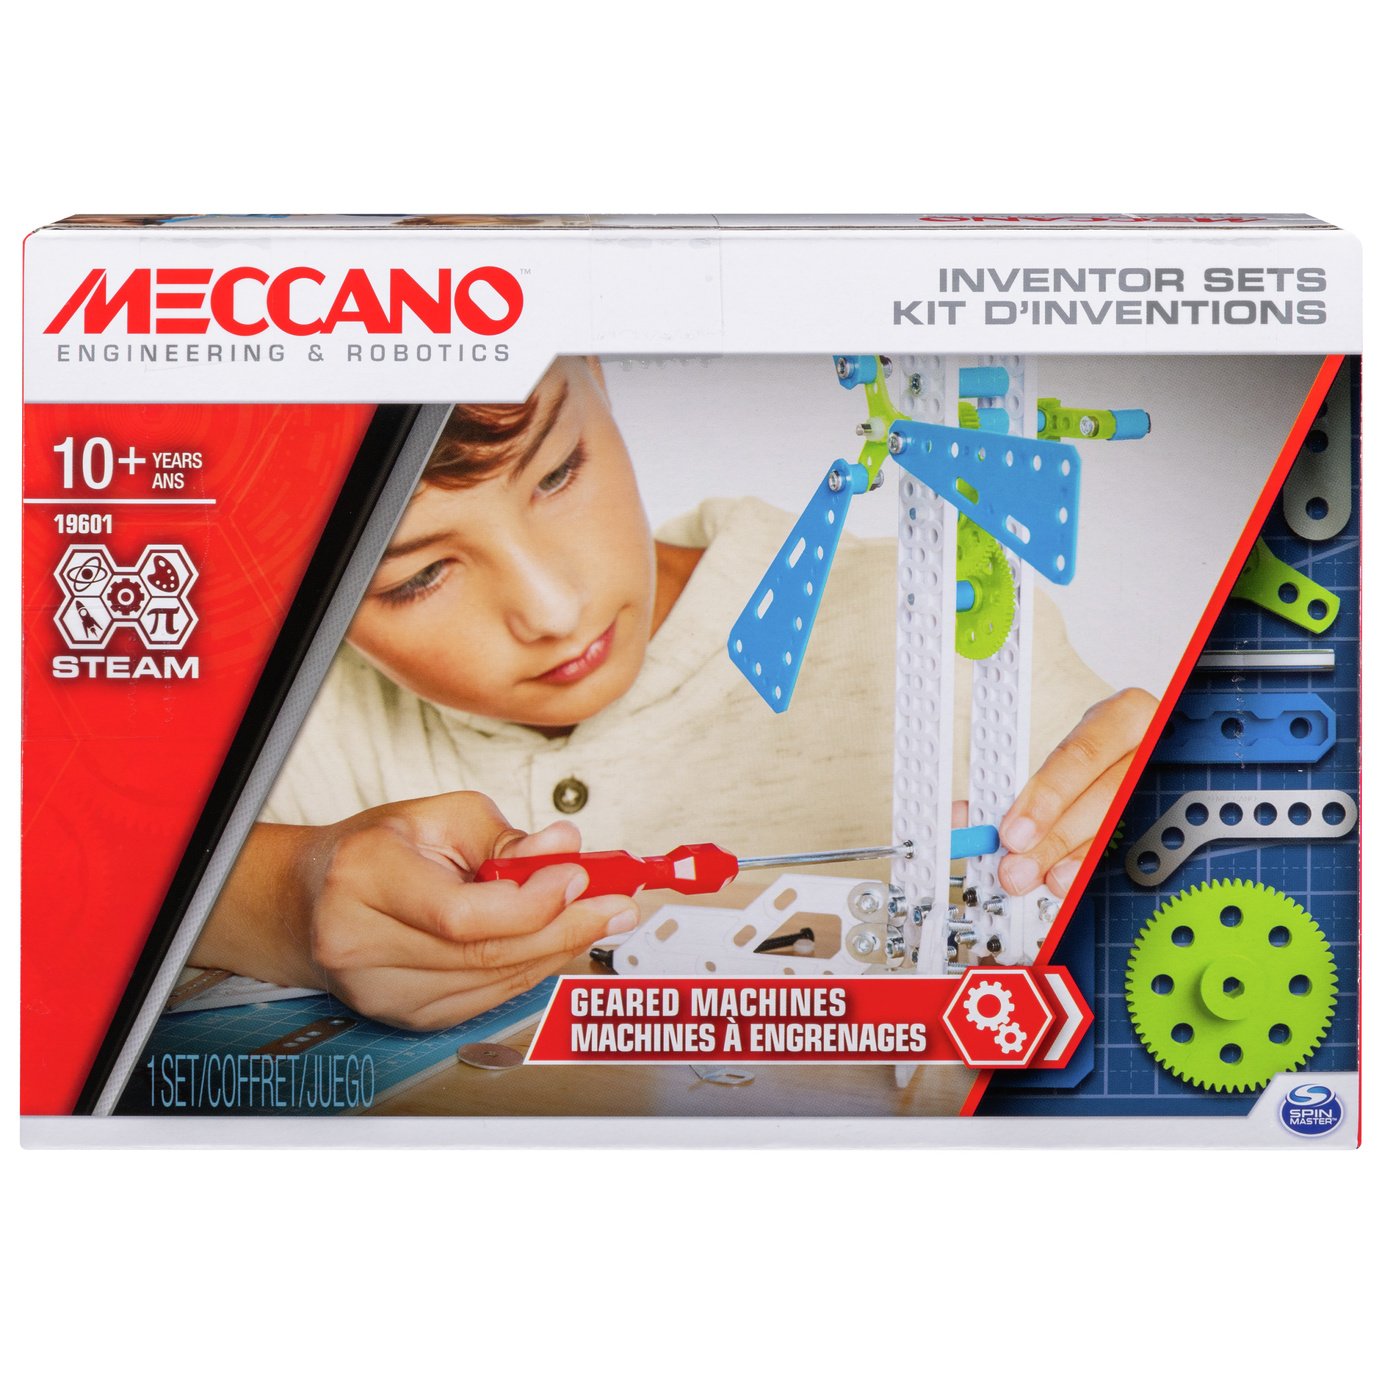 Meccano Inventors 3 Geared Machines Set Review